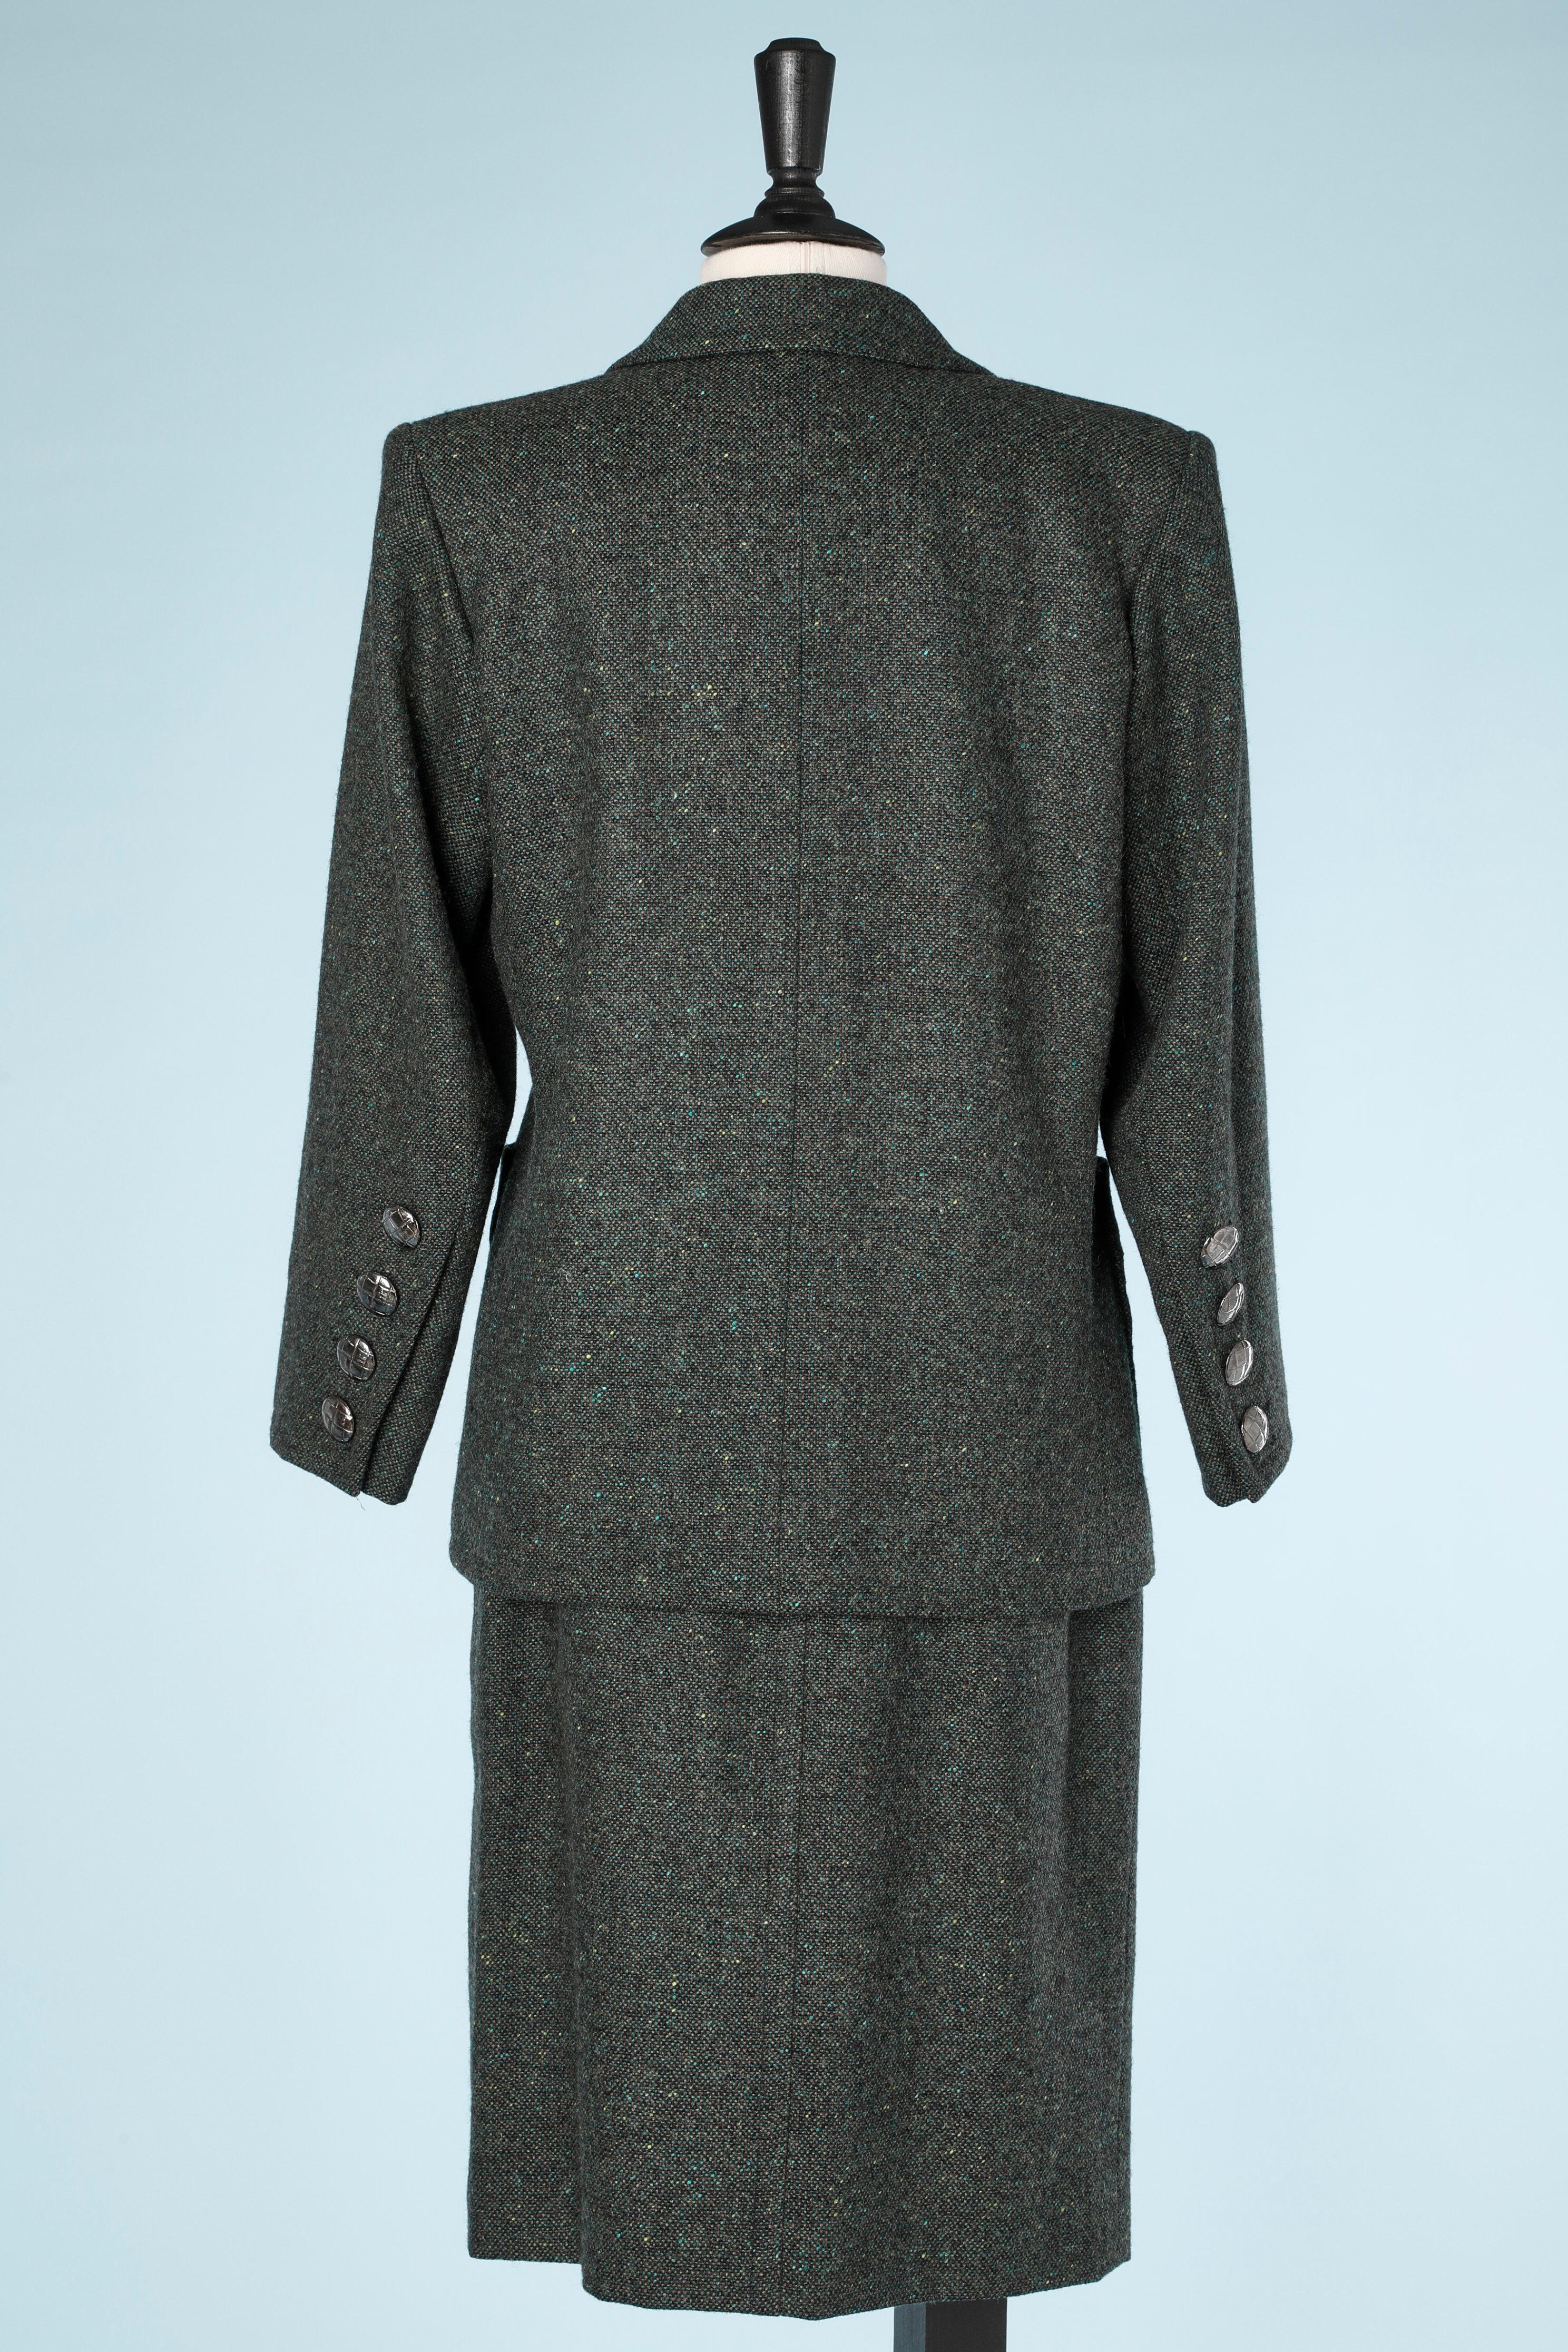 Dark green wool tweed skirt-suit Yves Saint Laurent Rive Gauche Circa 1980's  For Sale 4